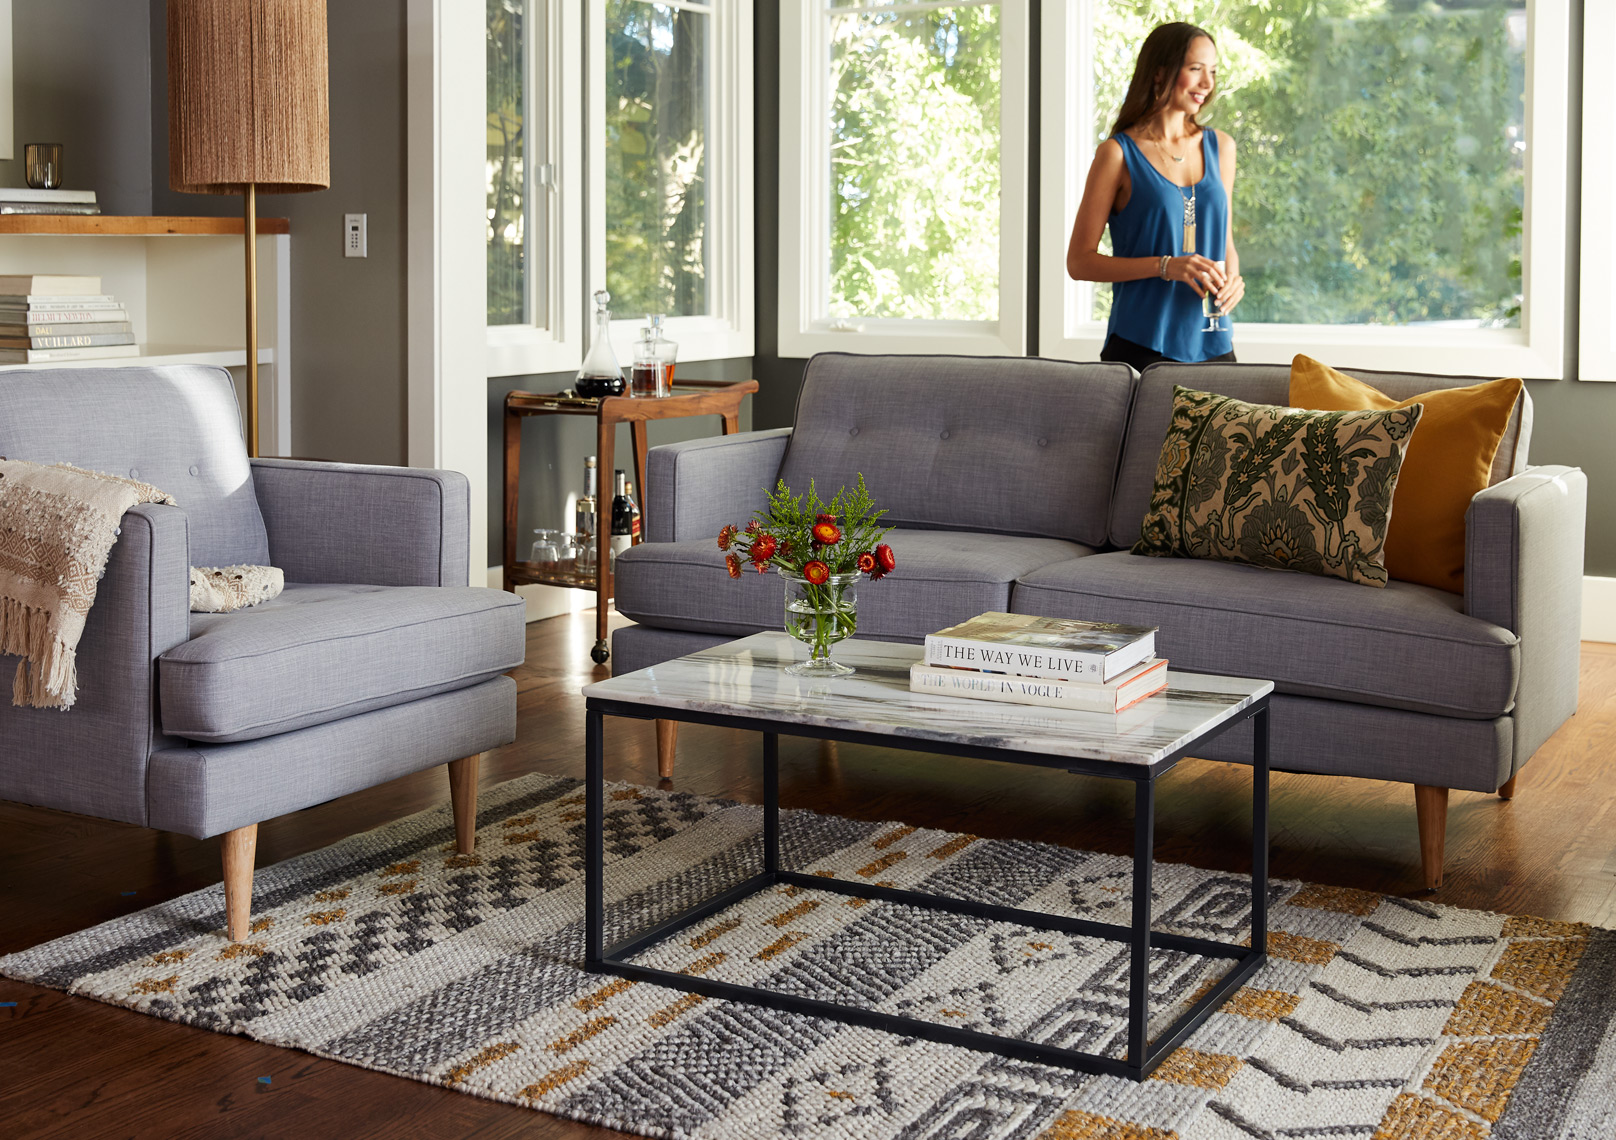 Living room grey upholstered furniture patterned rug in front of windows 